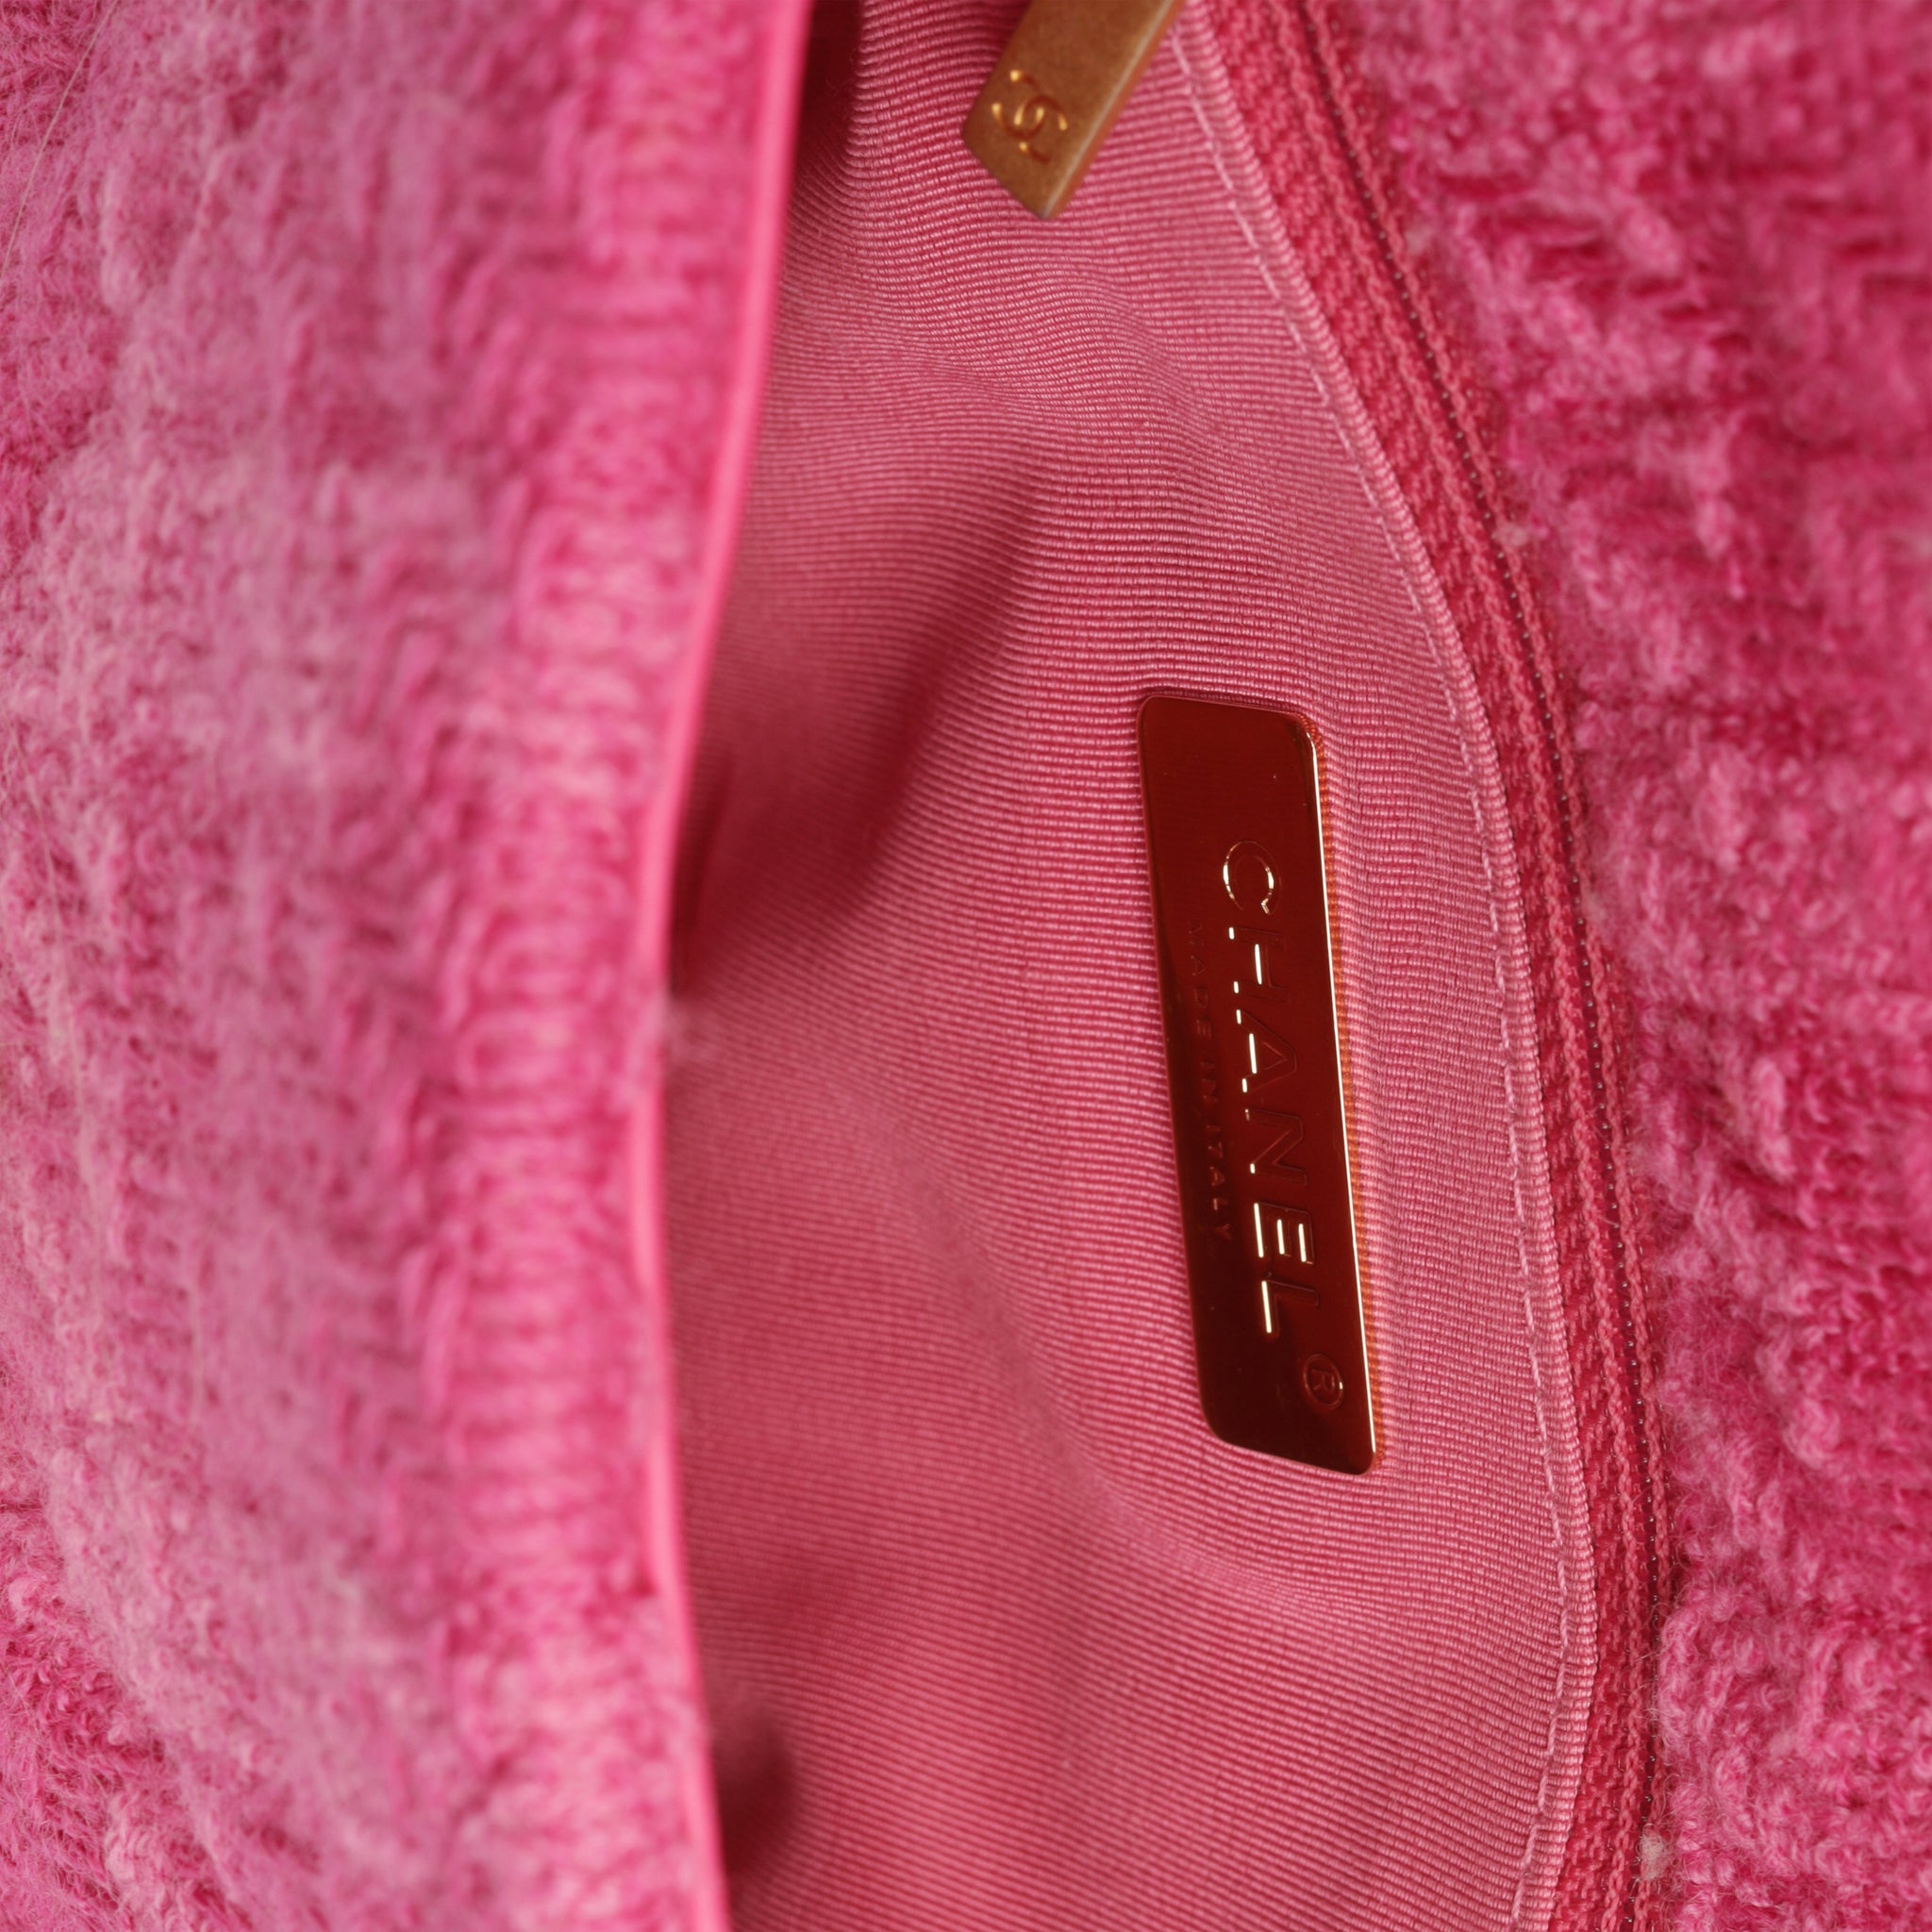 Chanel - Chanel 19 Flap Bag - Small - Pink Tweed and Mixed Fabrics